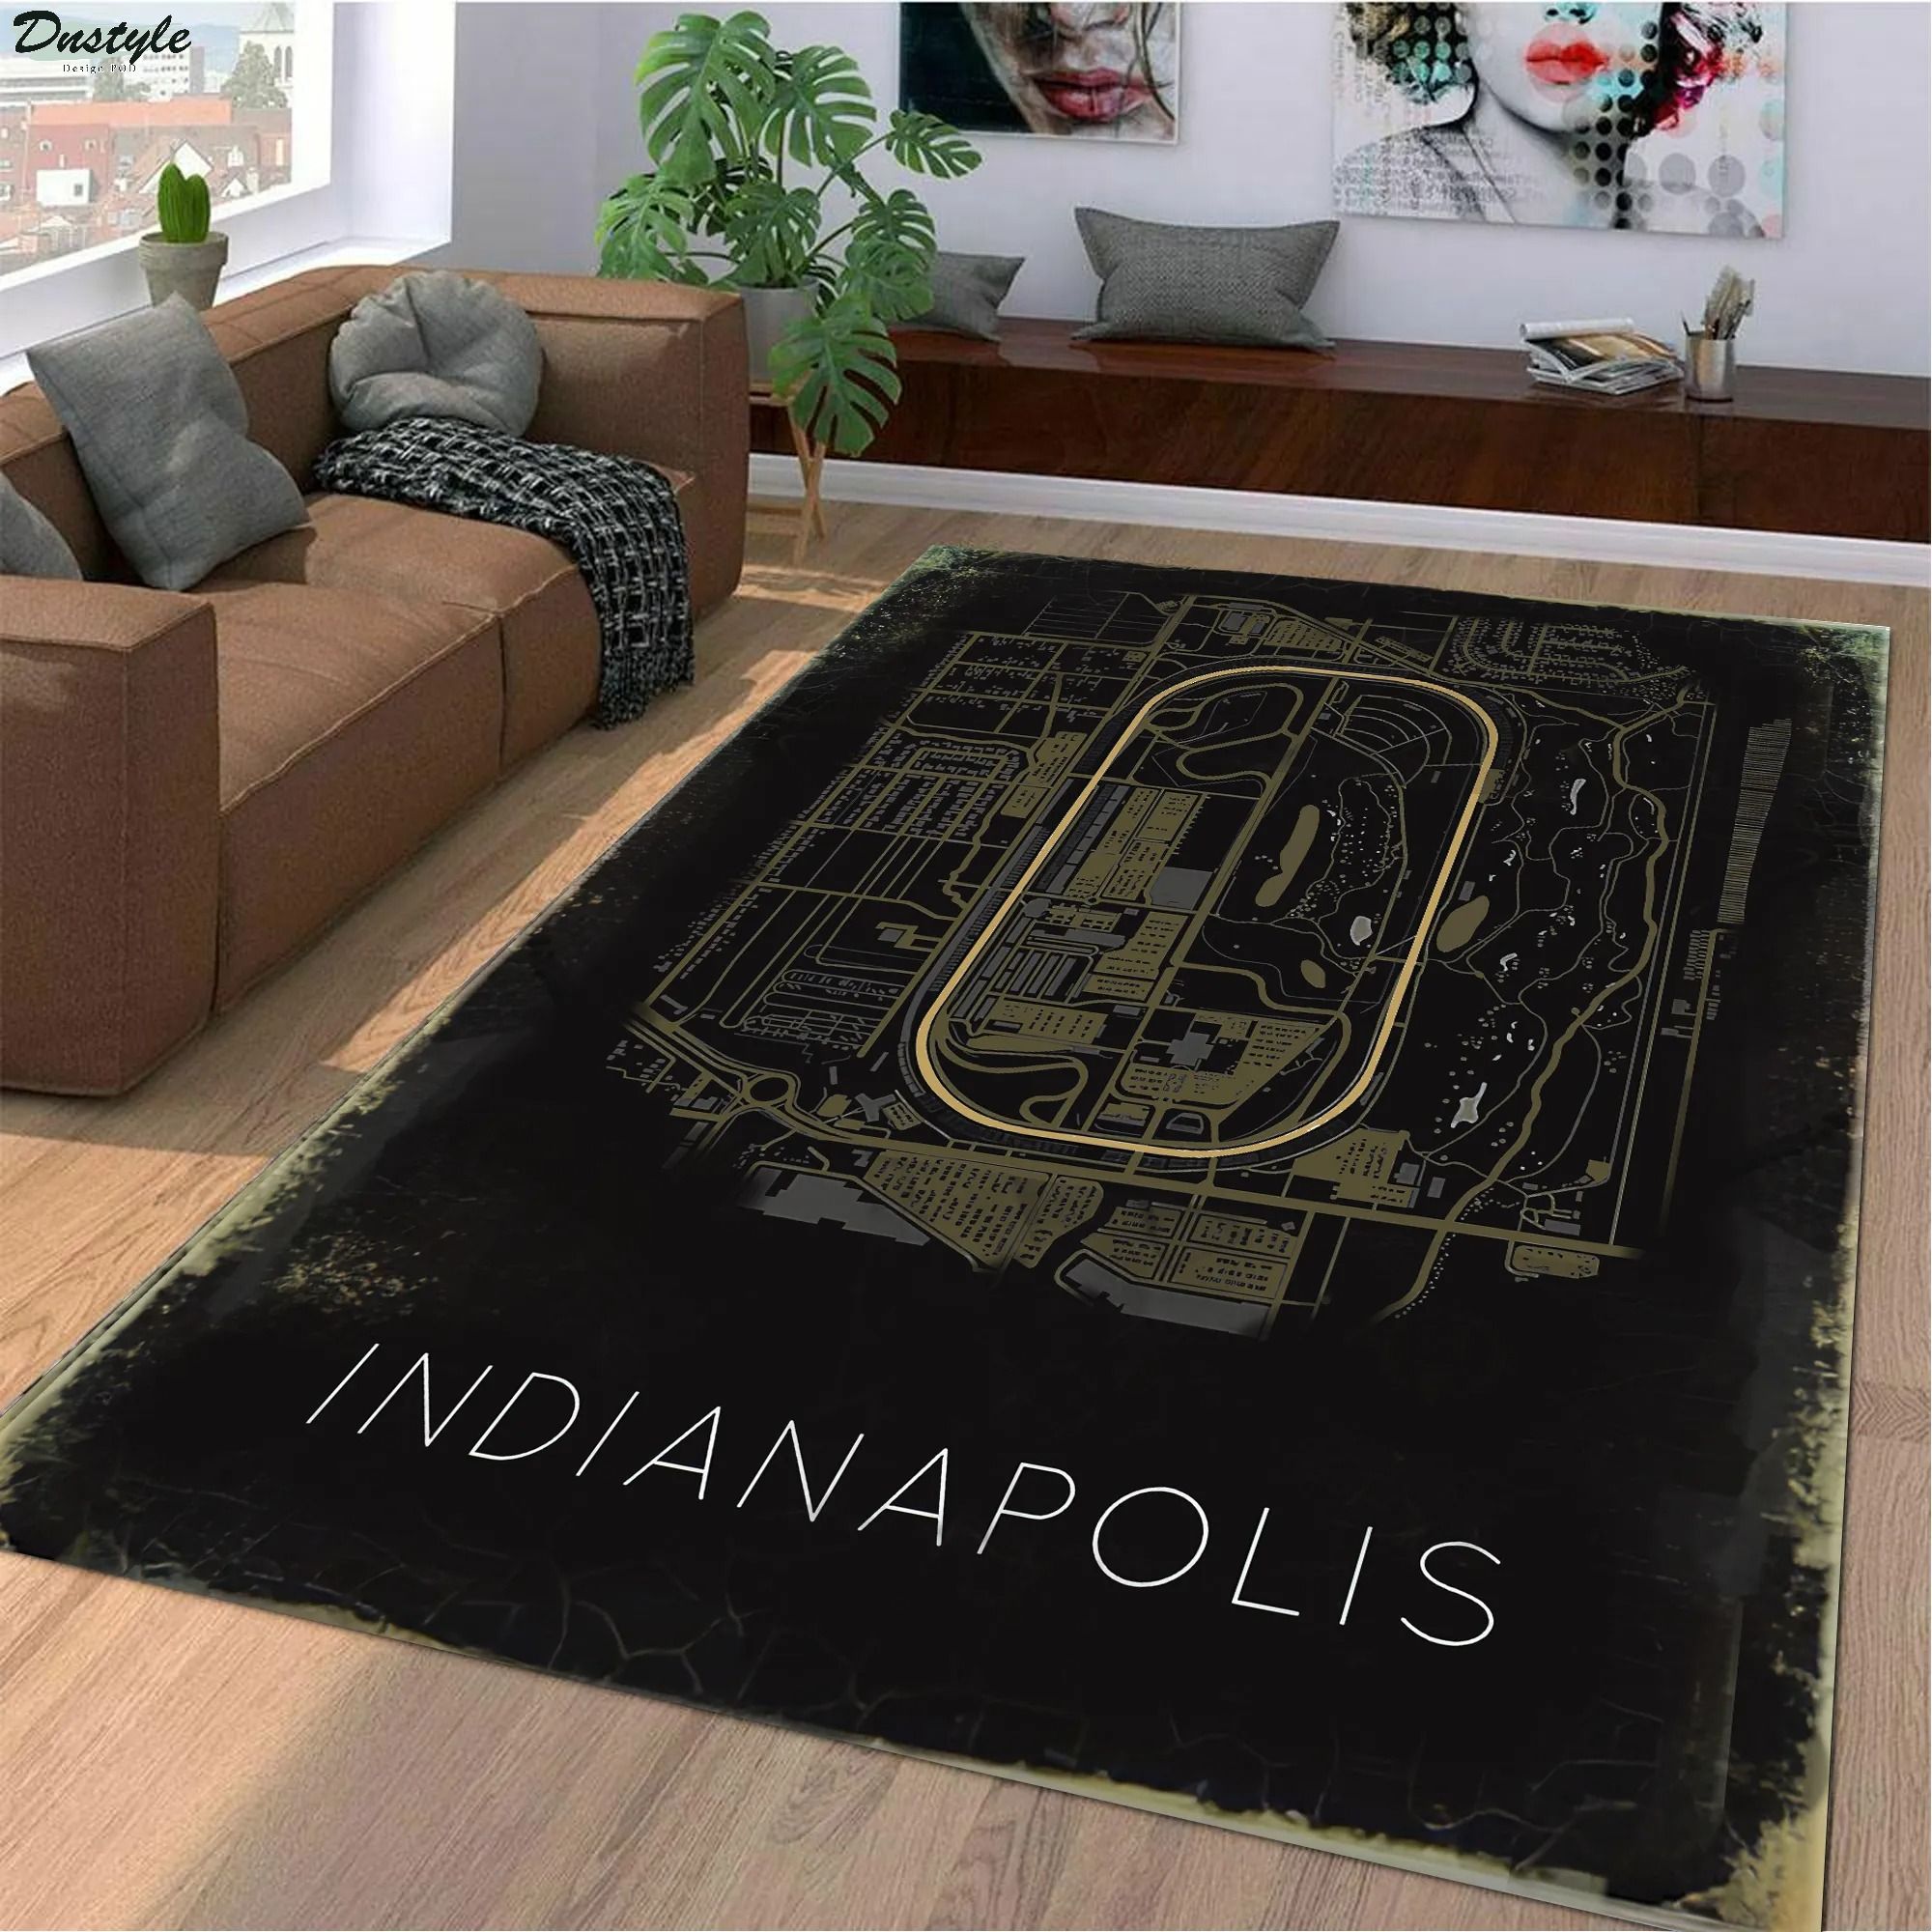 Indianapolis f1 track rug